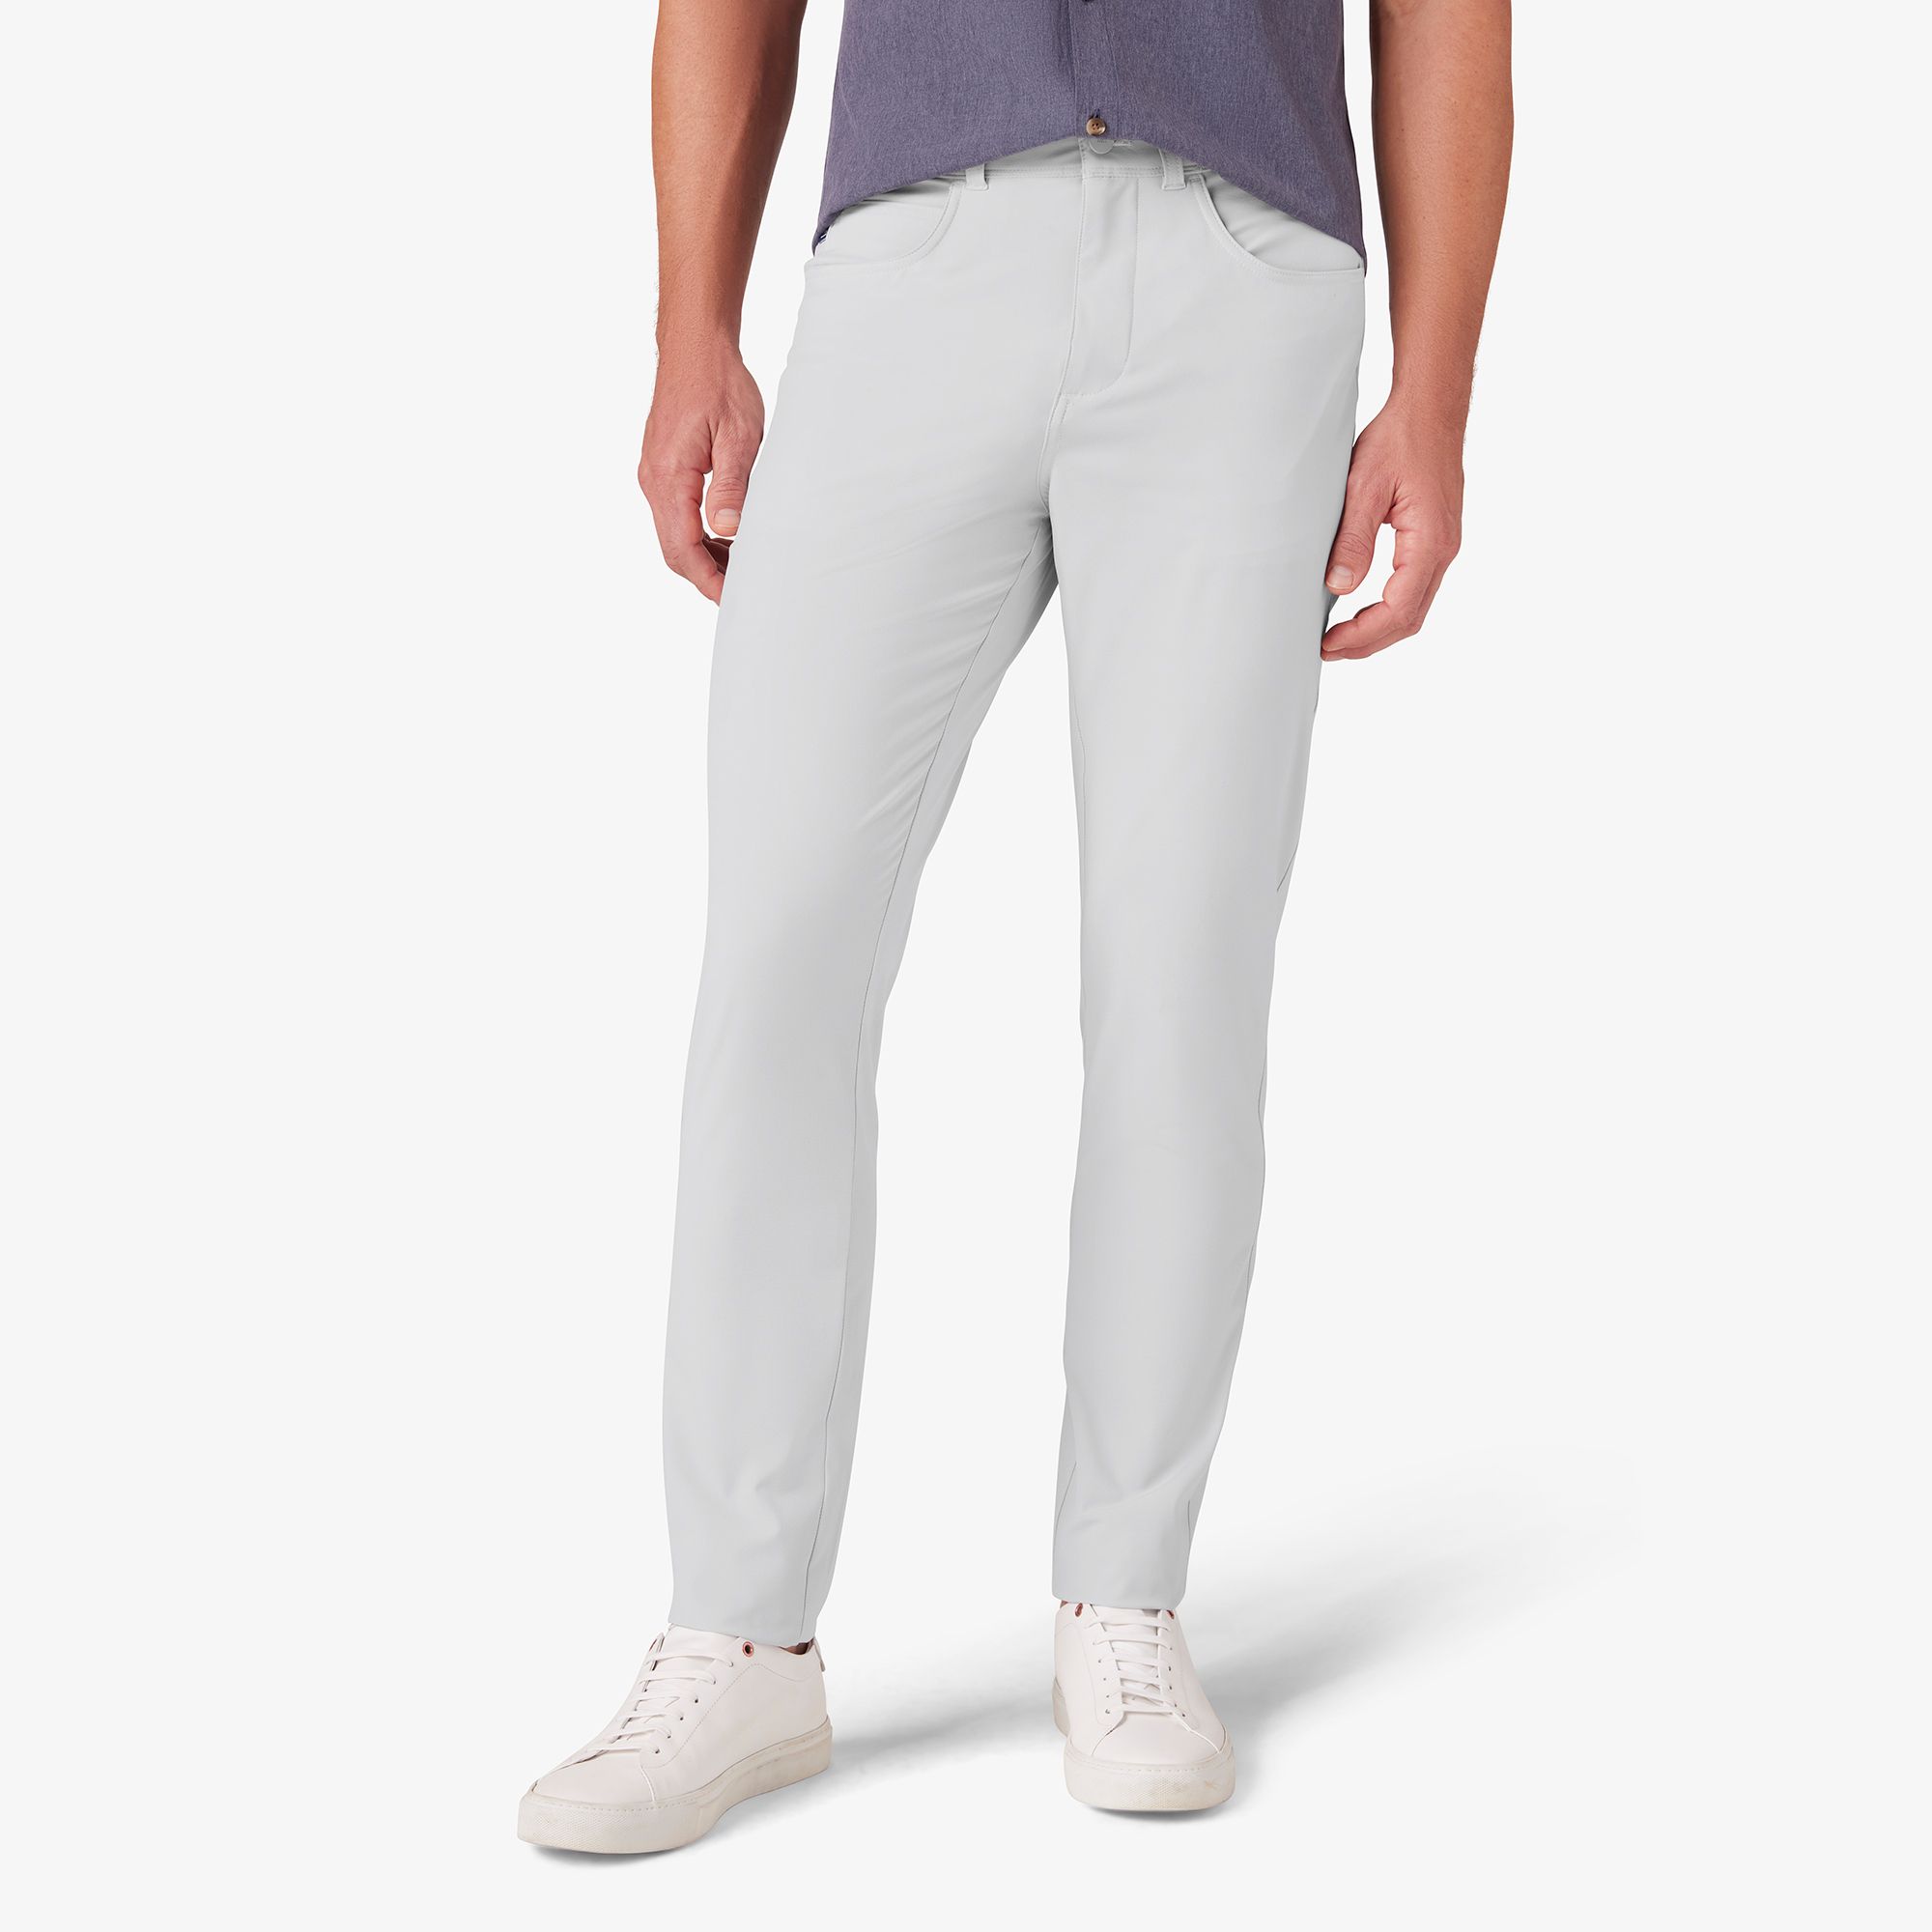 Fabulous Light Grey 4-Way Lycra Solid Regular Track Pants For Men